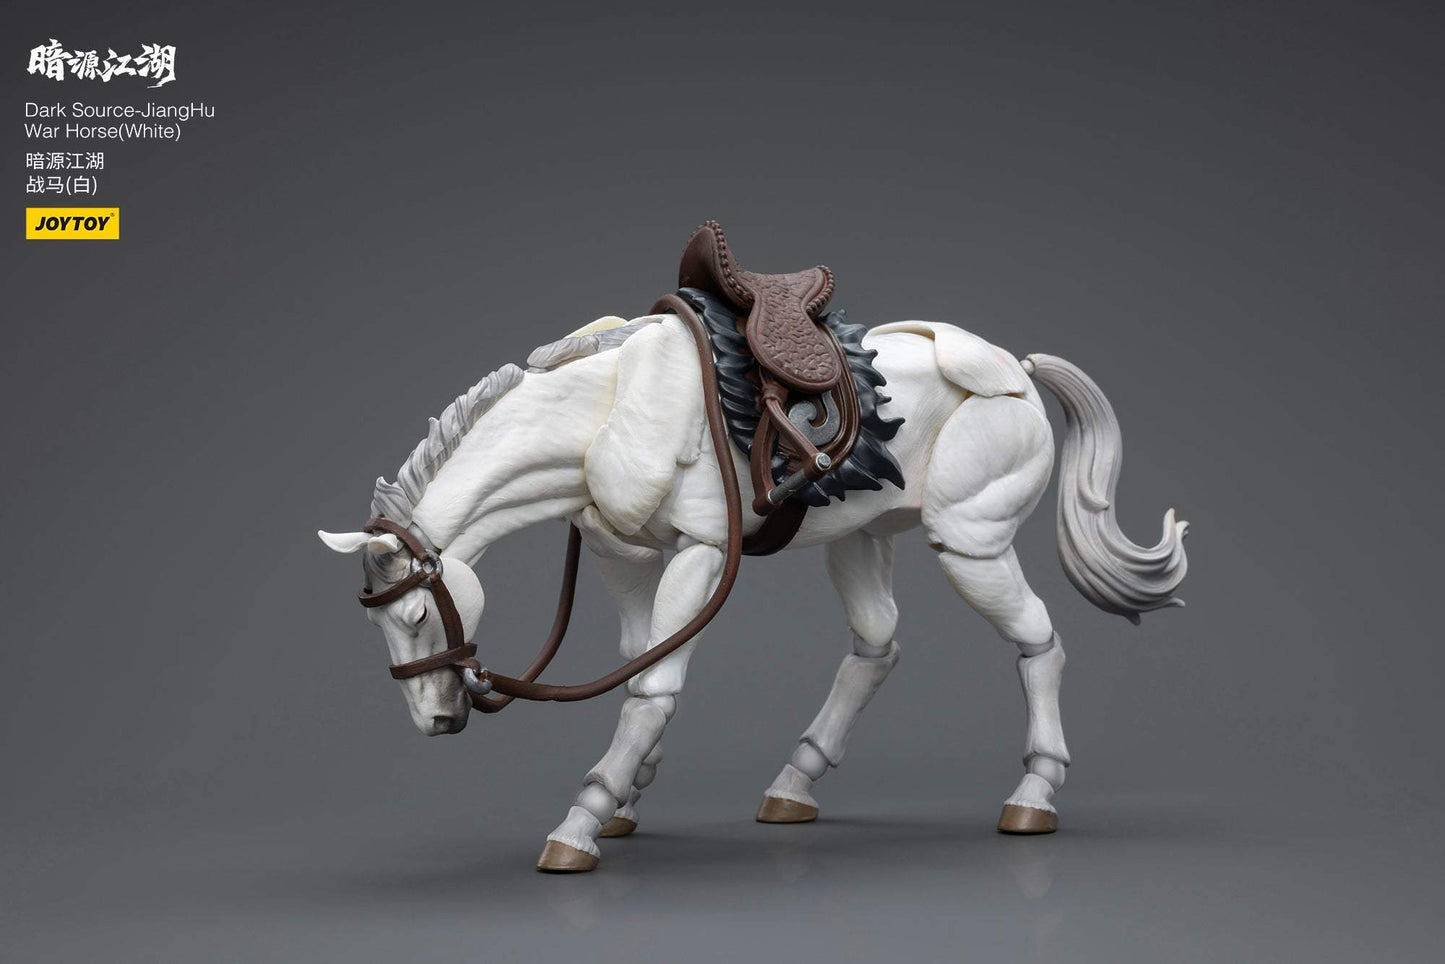 Dark Source - JiangHu War Horse ( White )